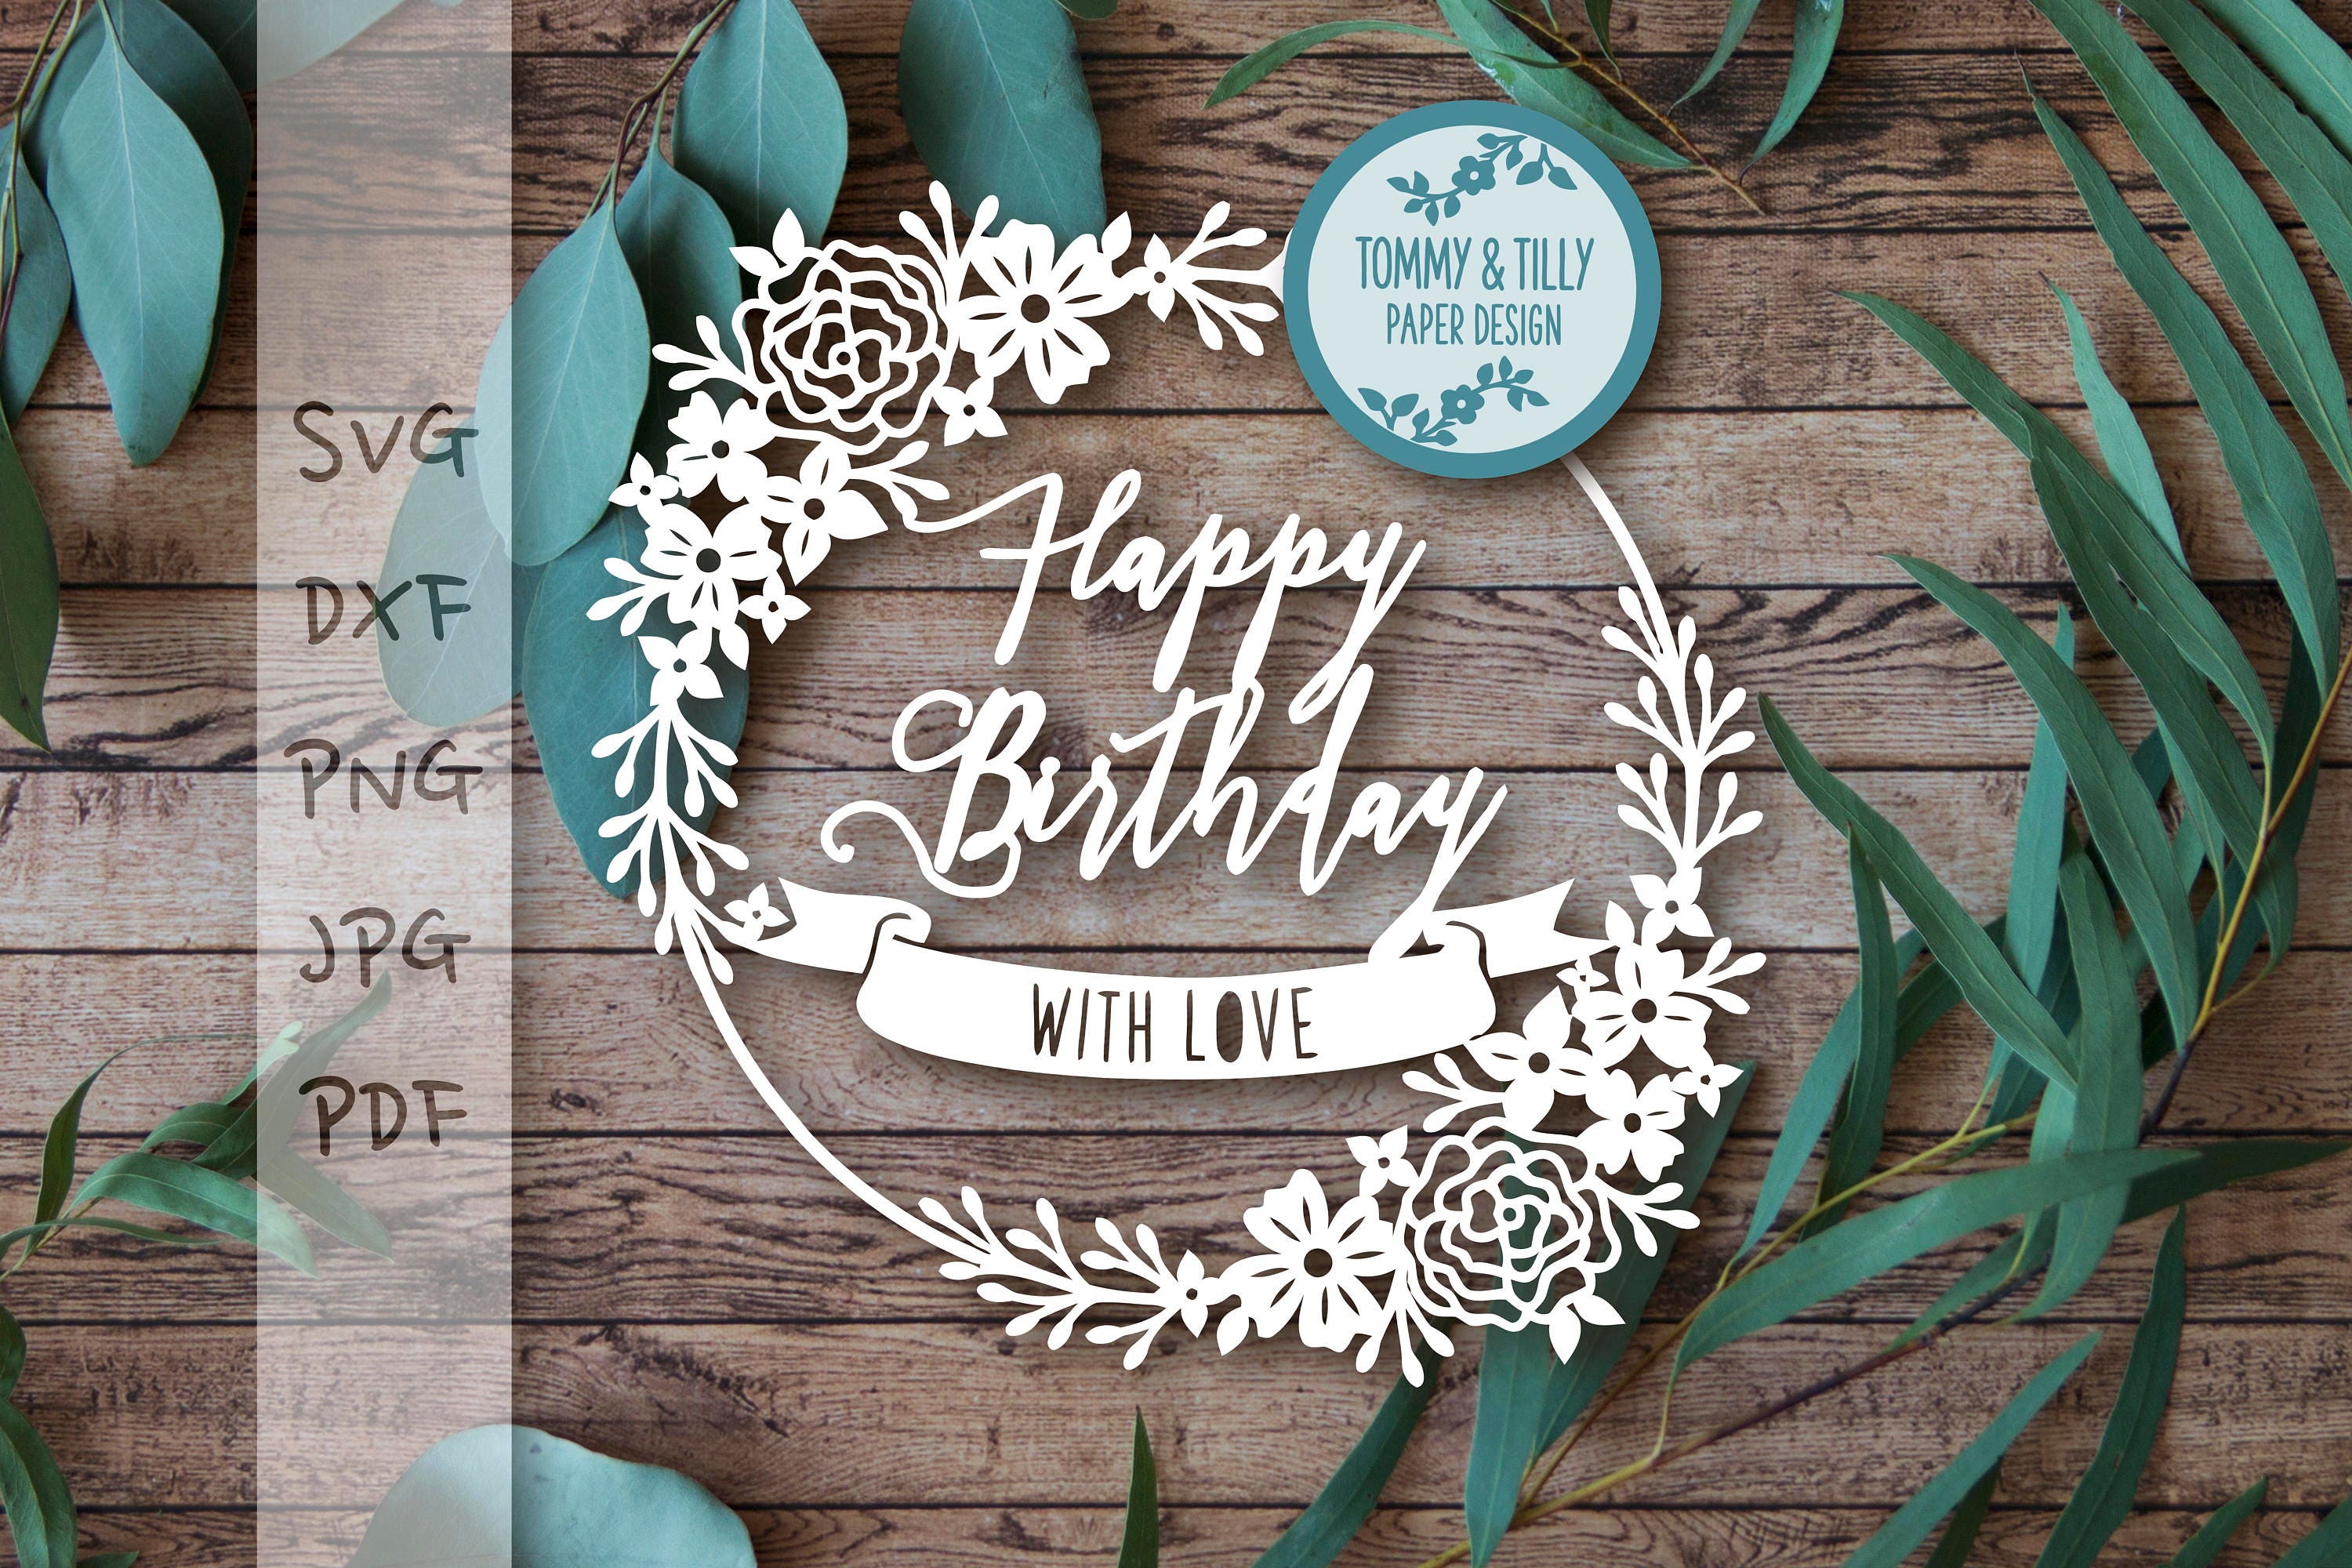 Download Happy Birthday Design SVG DXF PNG Pdf Jpg Papercutting | Etsy